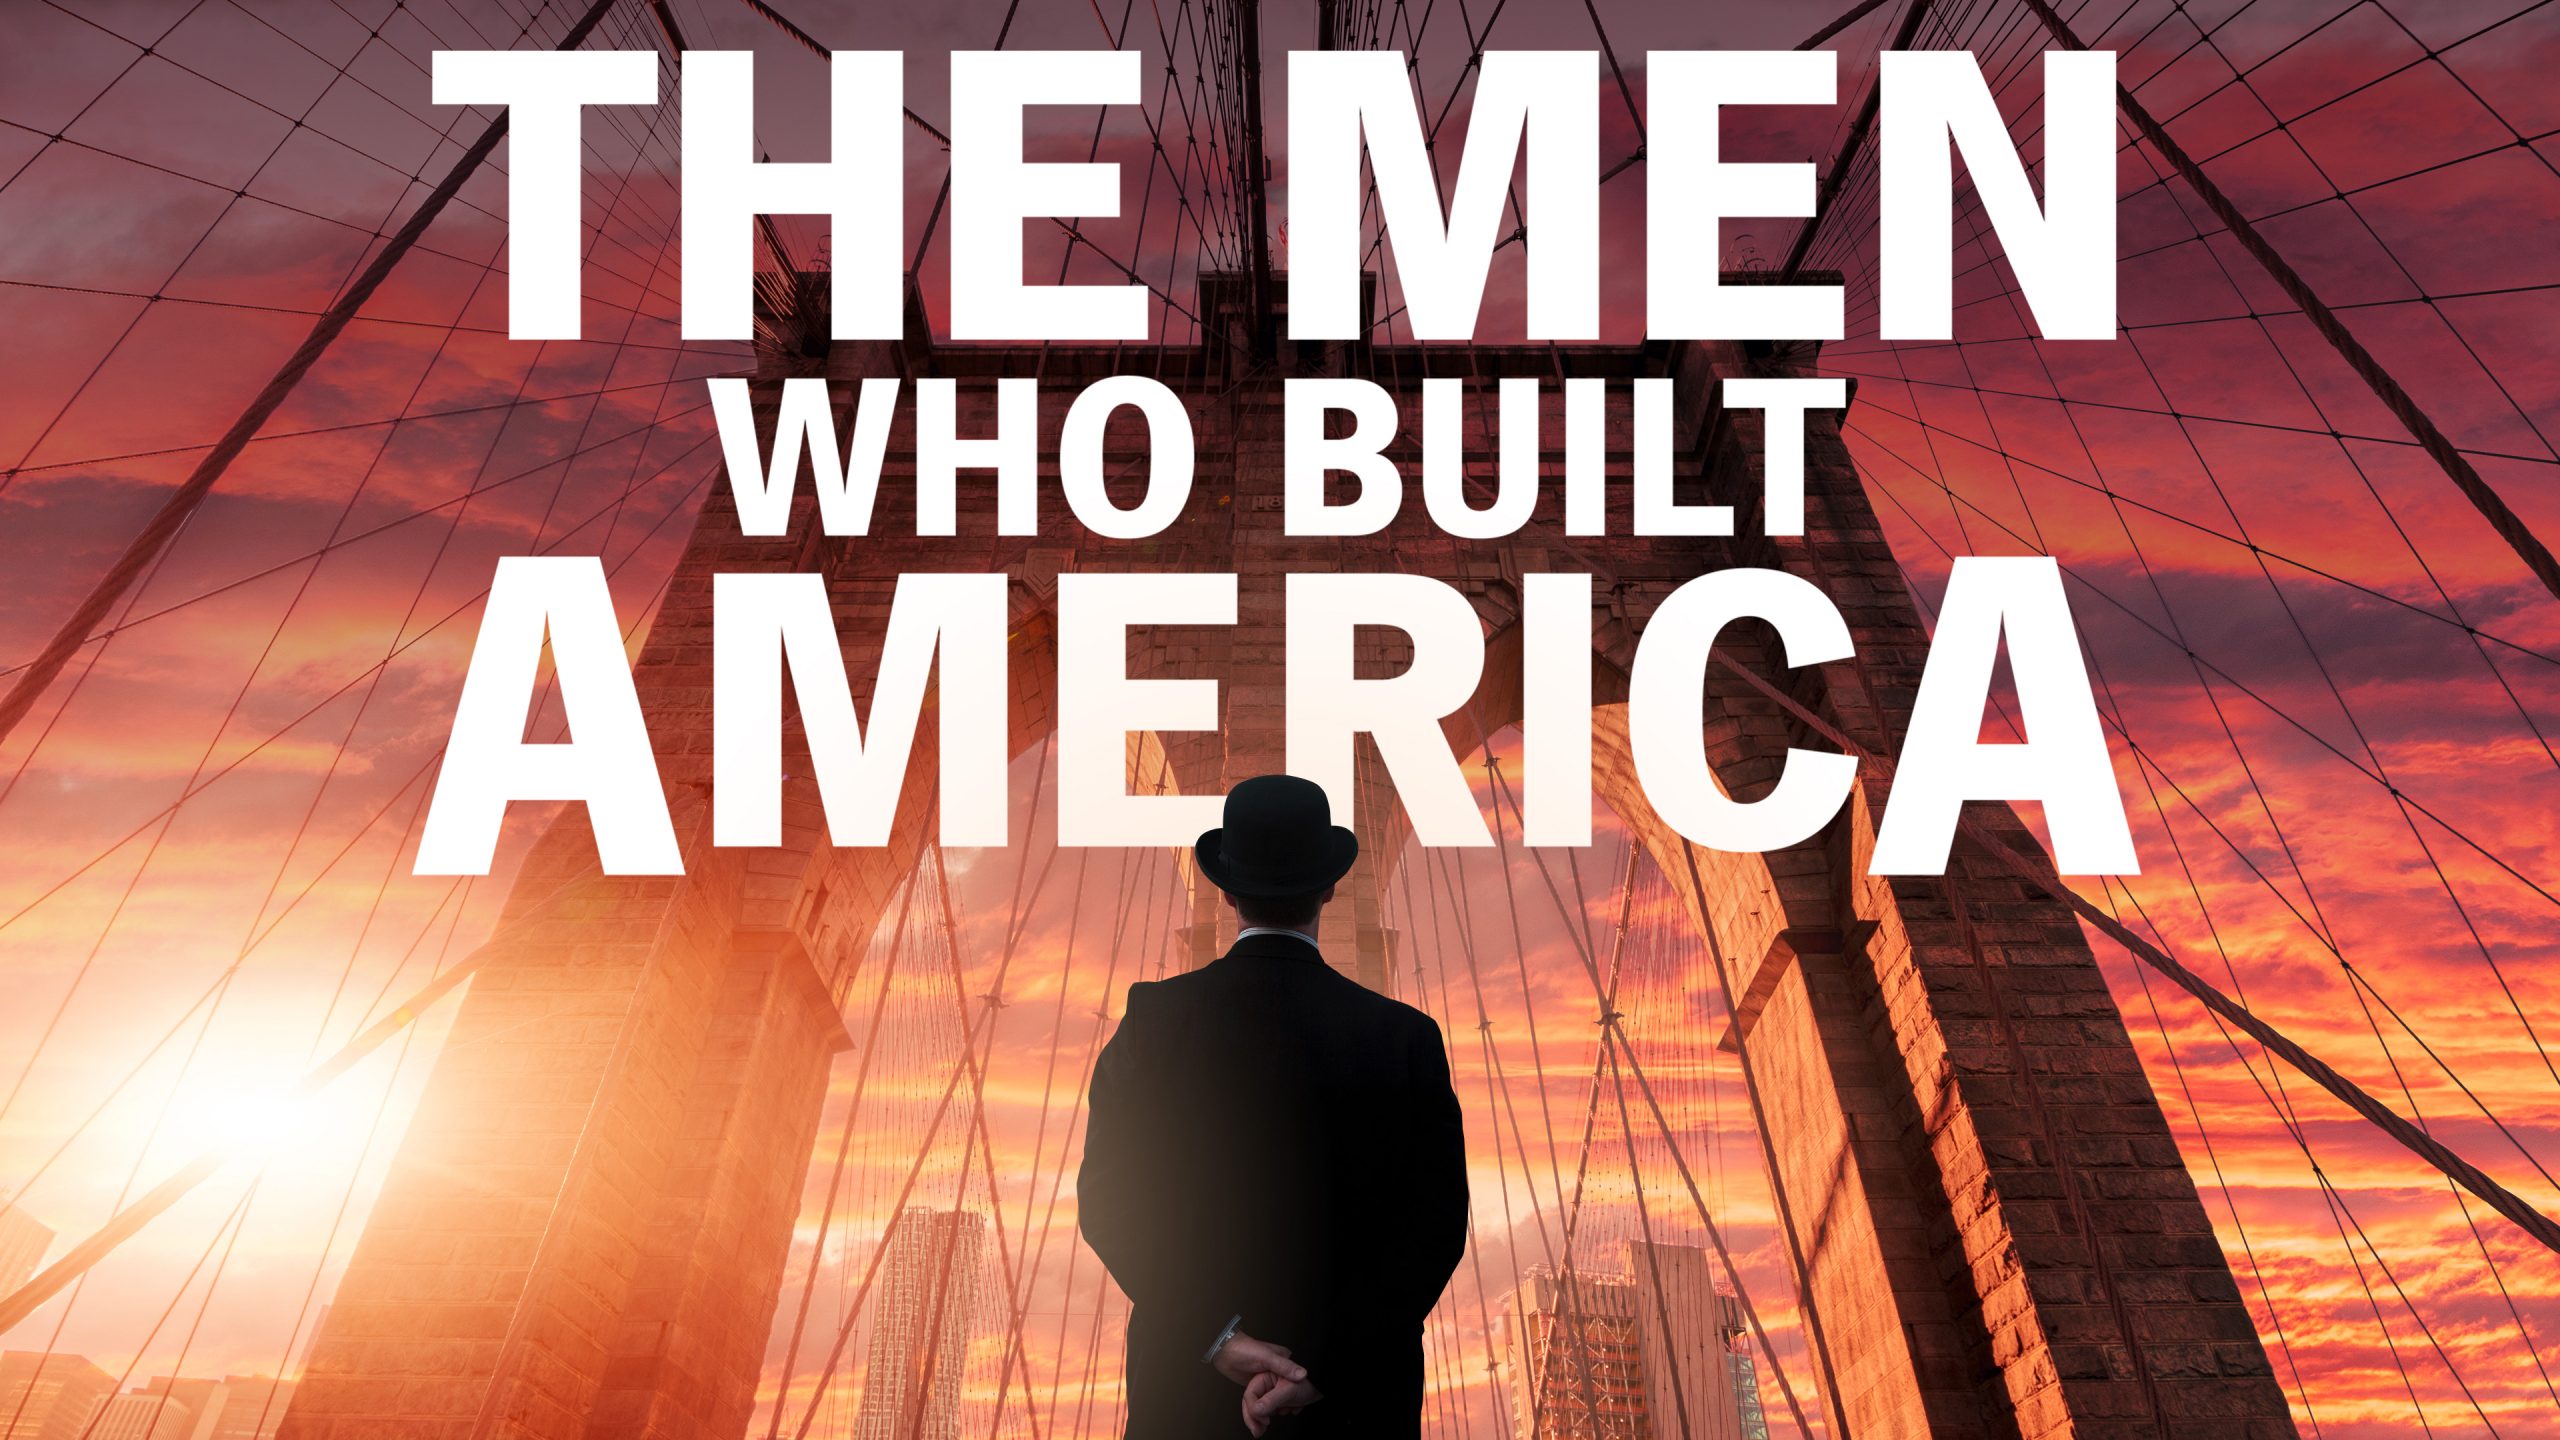 the man built america